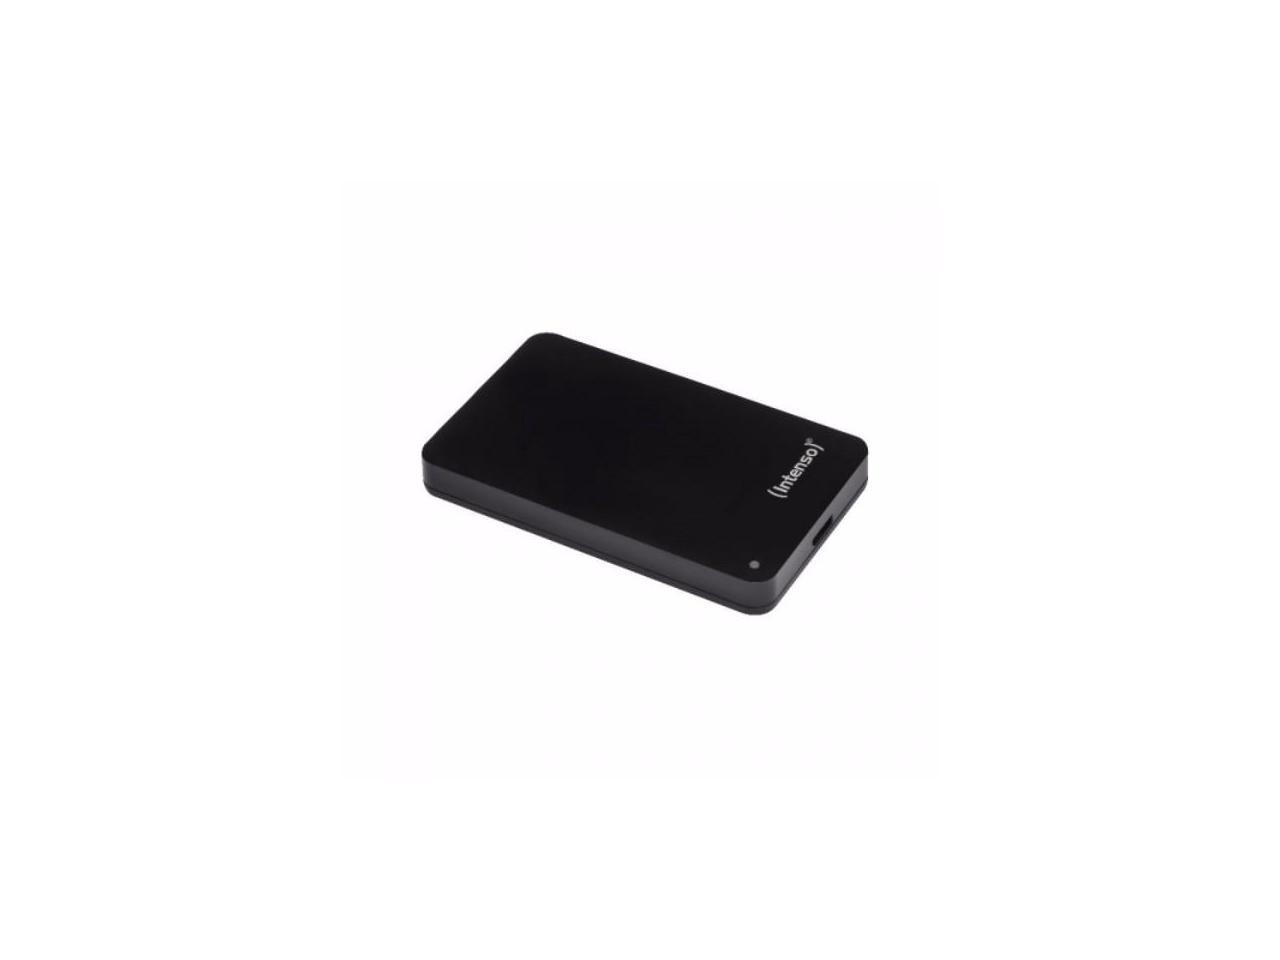 Intenso 2TB Portable Hard Drive USB 3.0 Model 6021580 Black